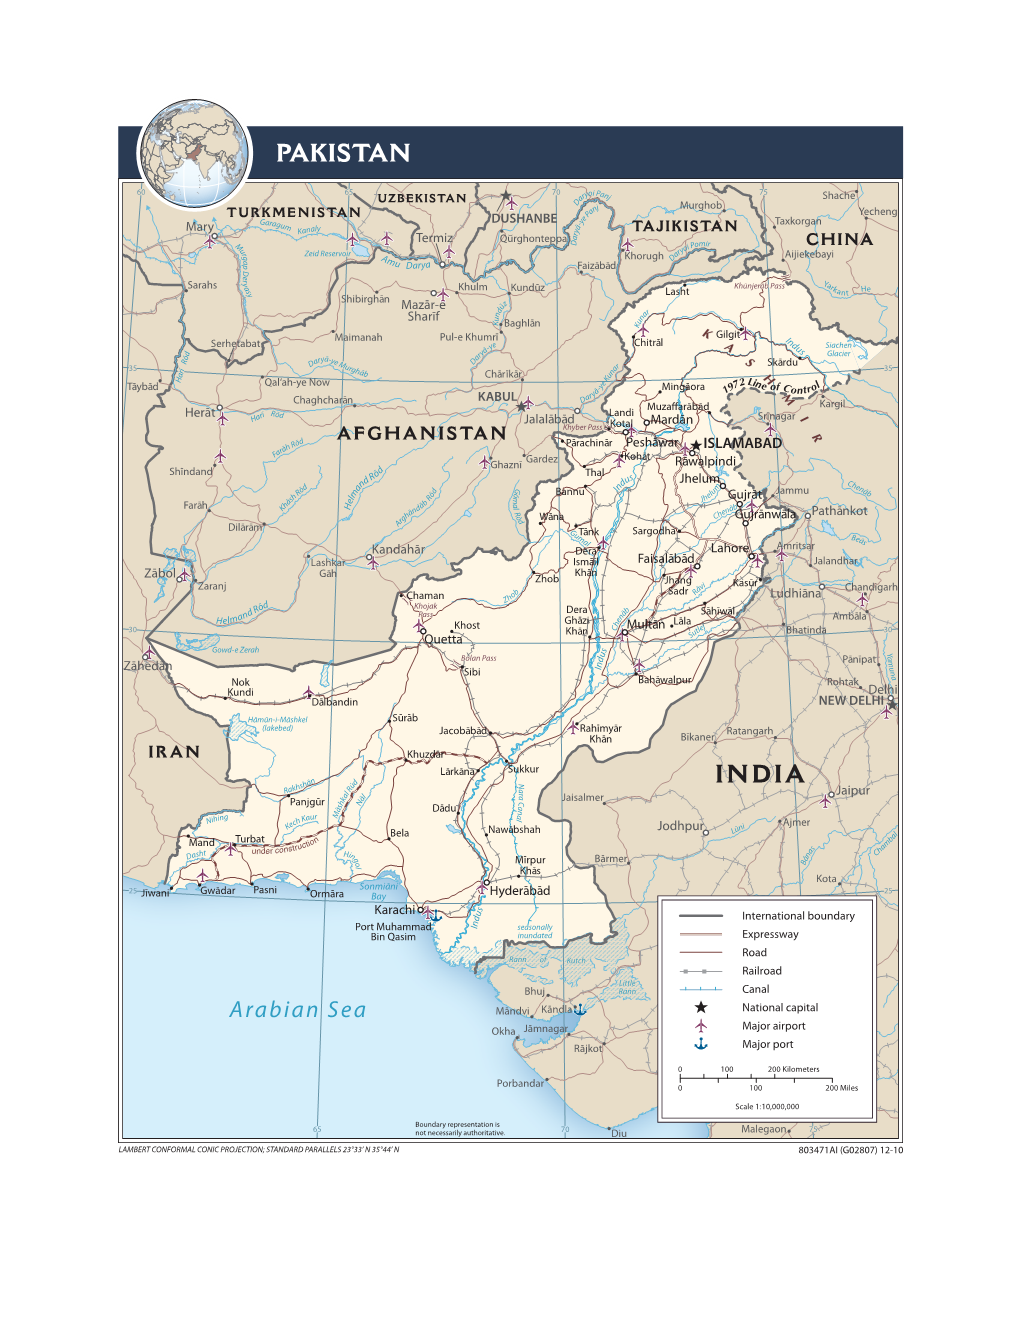 India Pakistan